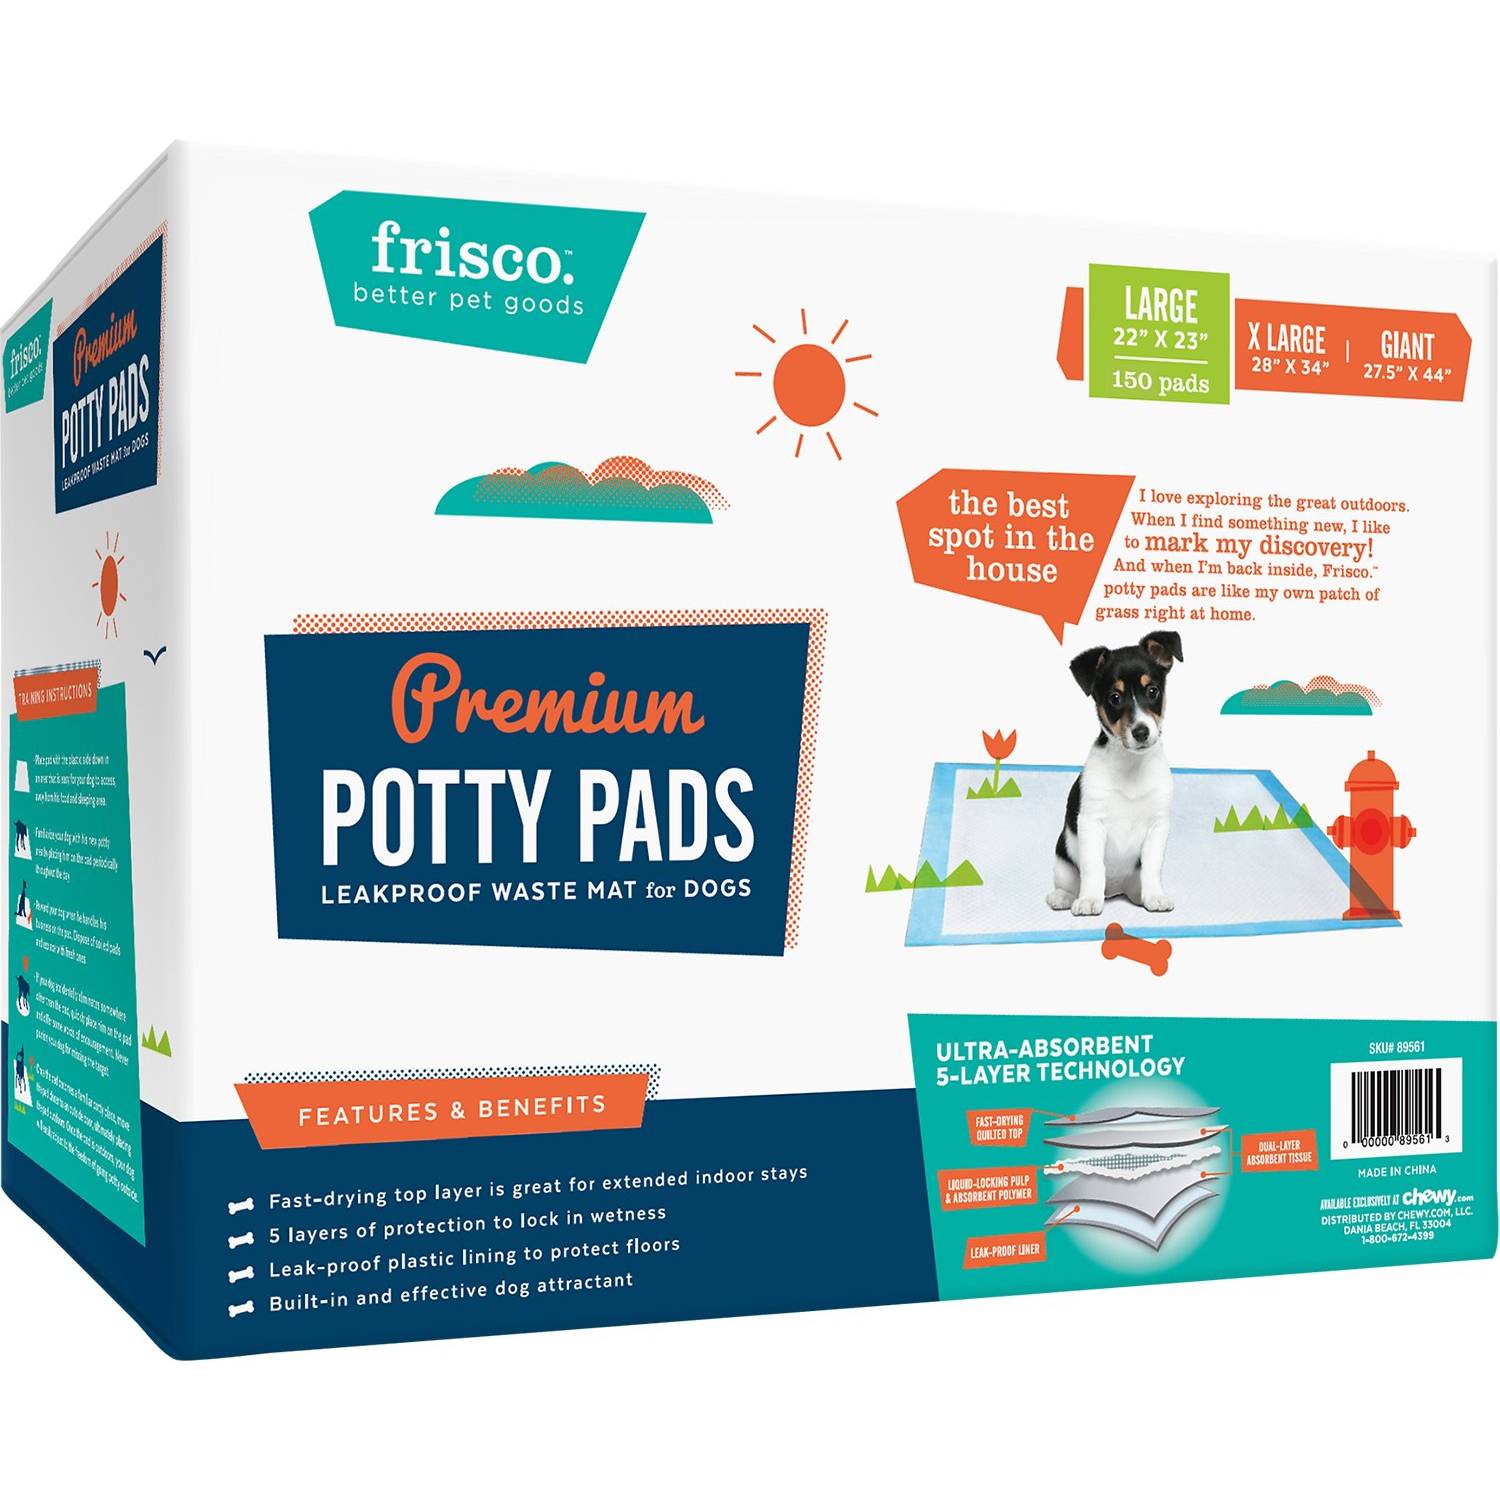 Frisco Dog Training Potty Pads (1)